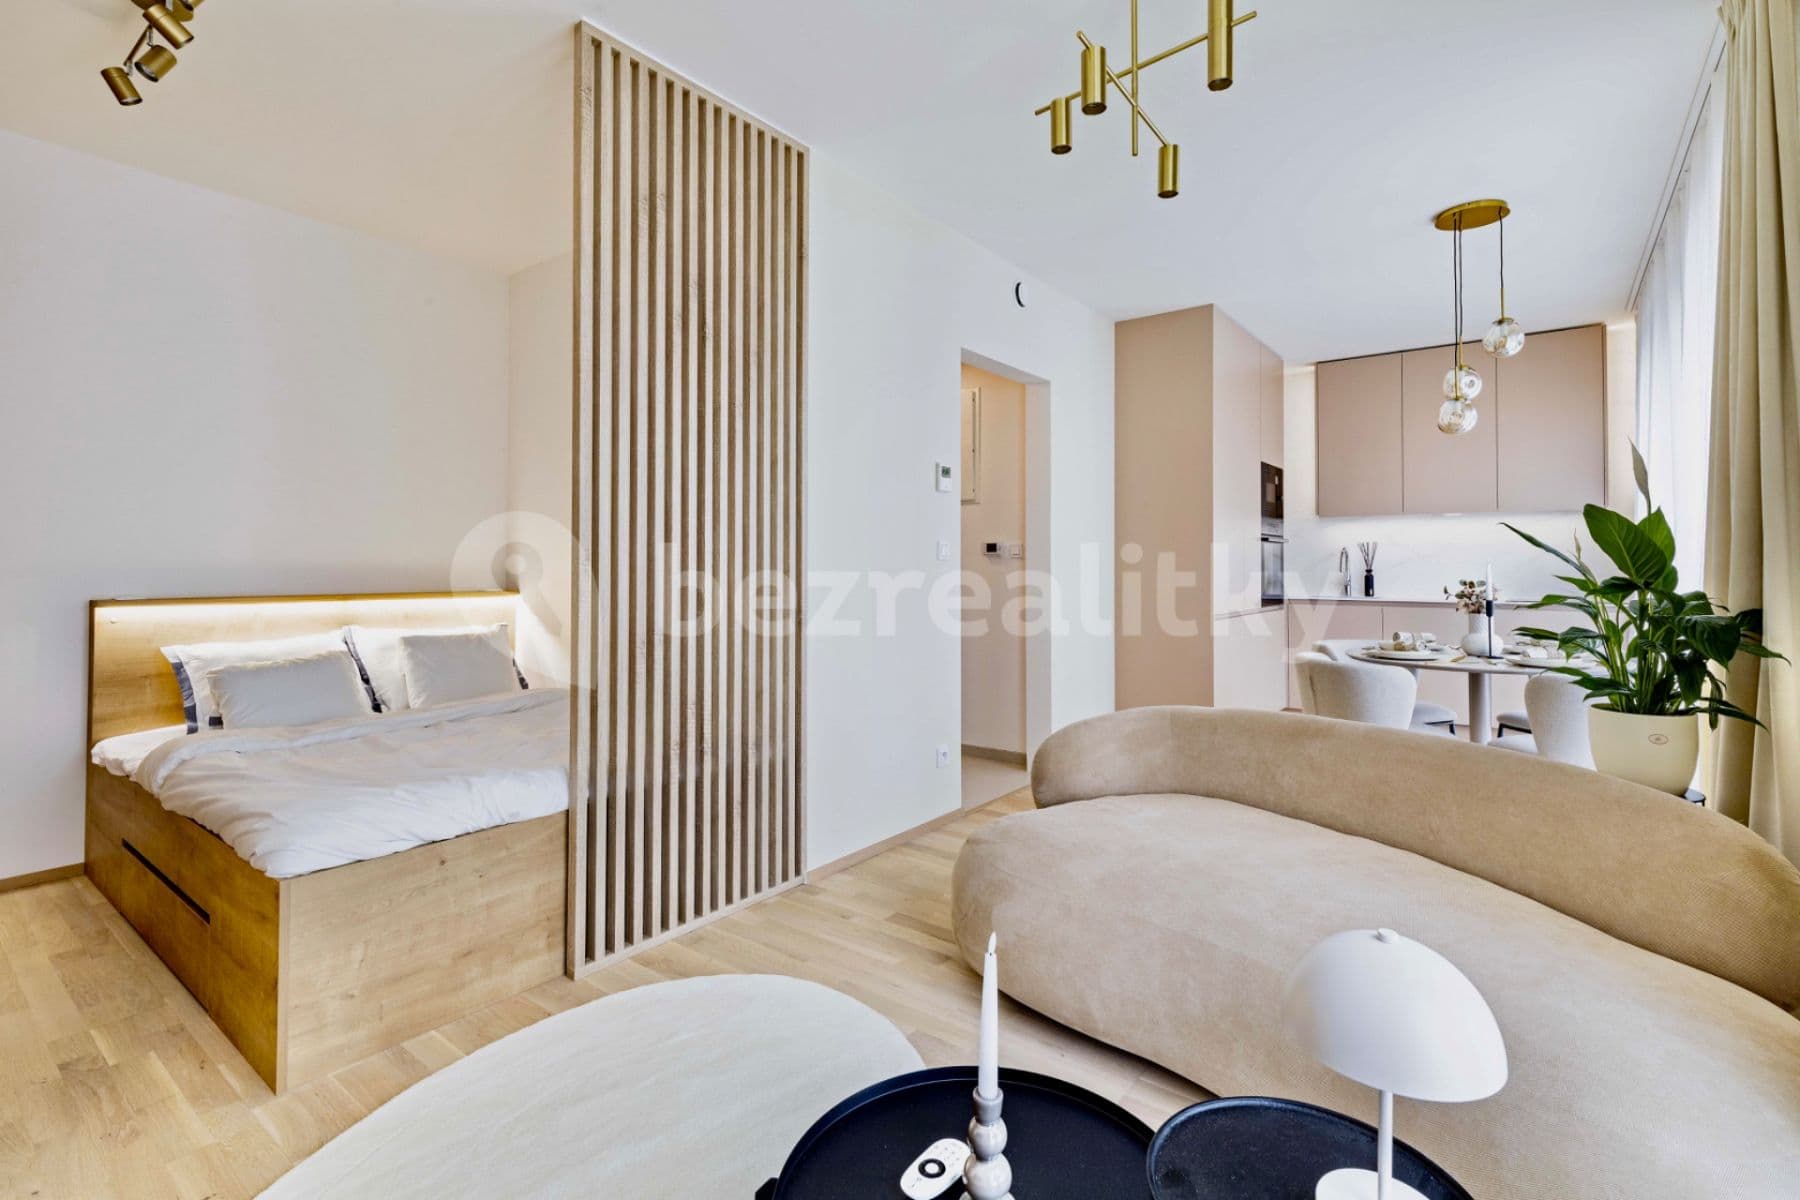 1 bedroom with open-plan kitchen flat for sale, 37 m², V Náklích, Prague, Prague